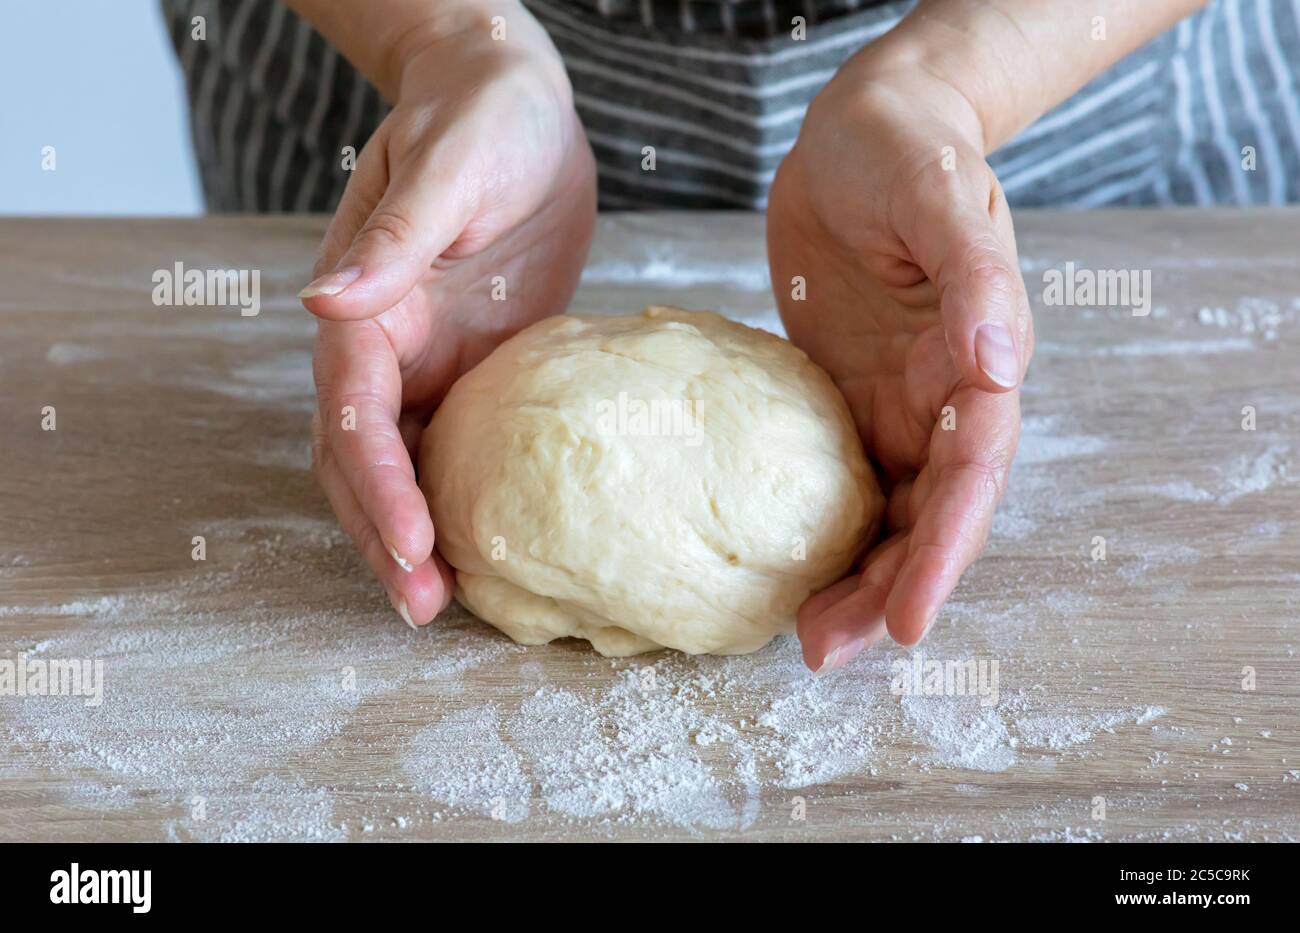 yeast dough and human arms, selective focus Stock Photo